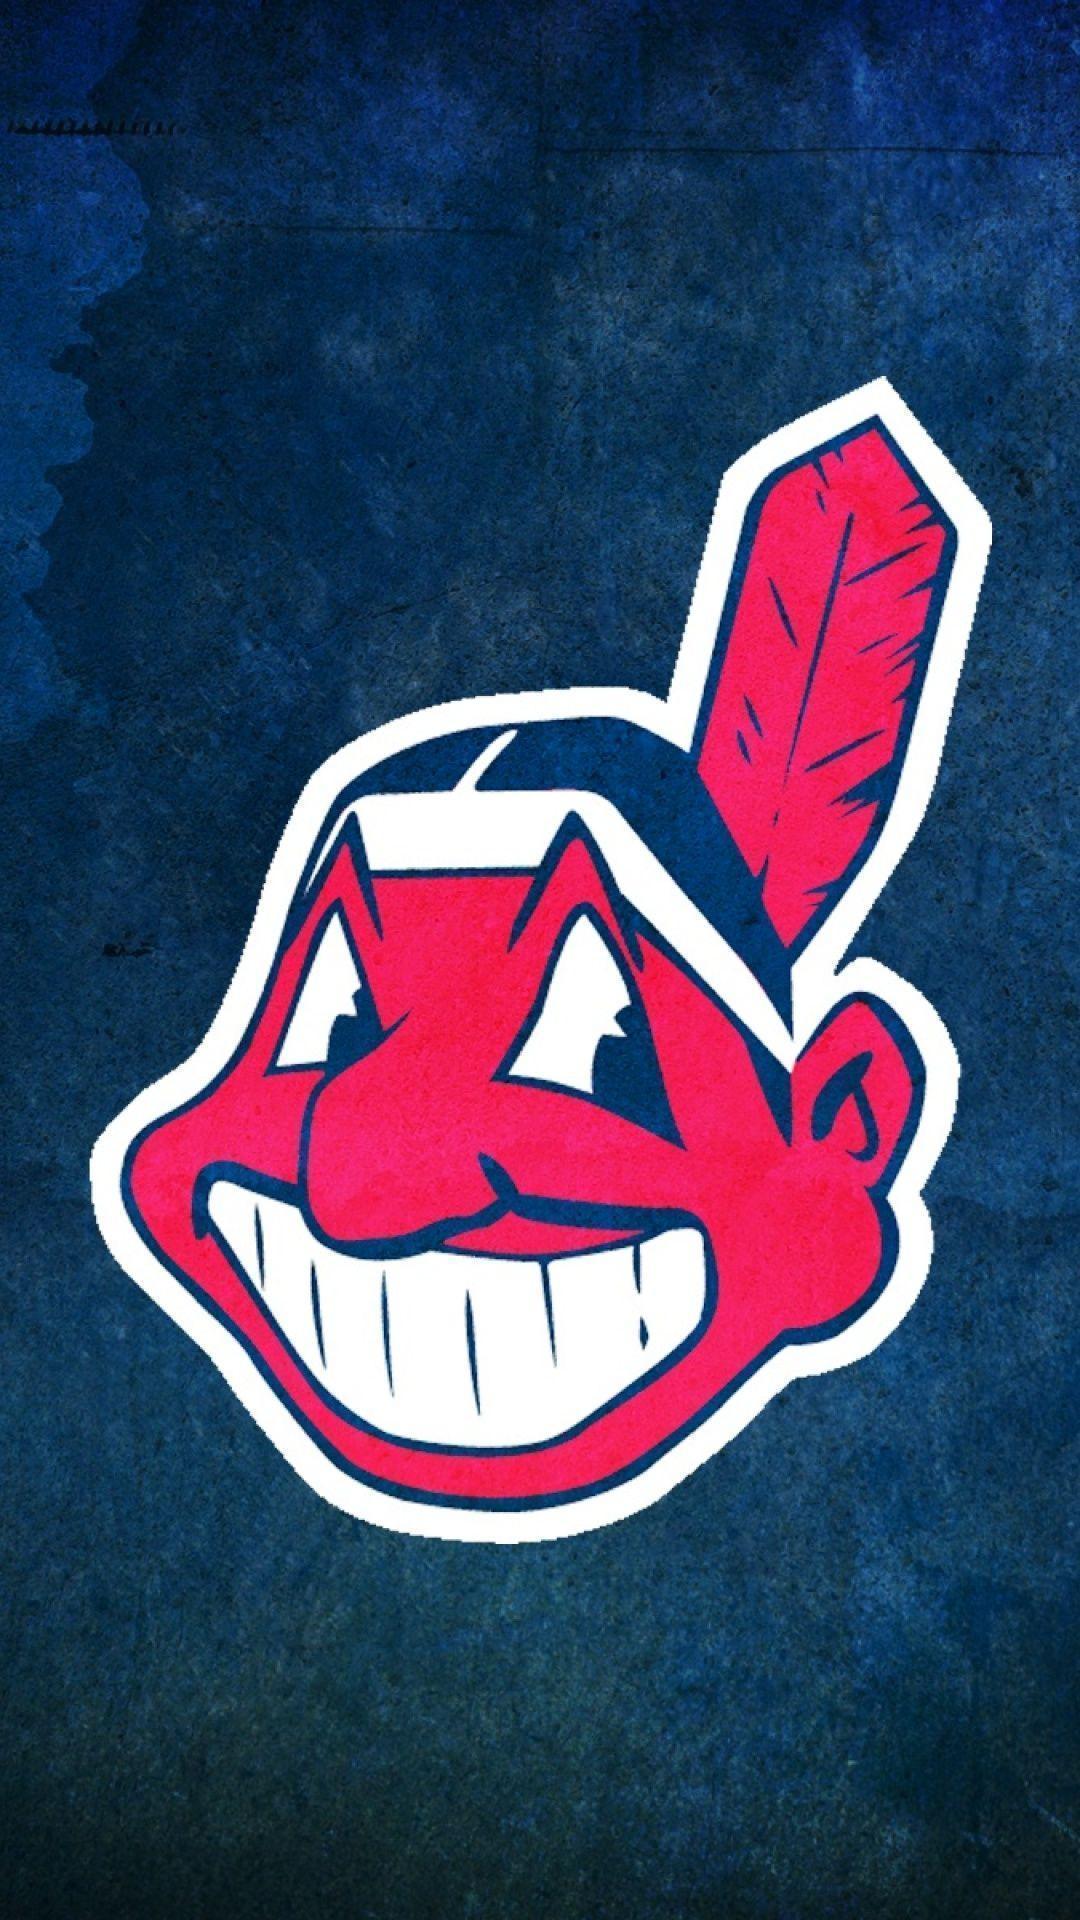 Cleveland Indians Wallpaper : Cleveland Indians Wallpapers - Wallpaper